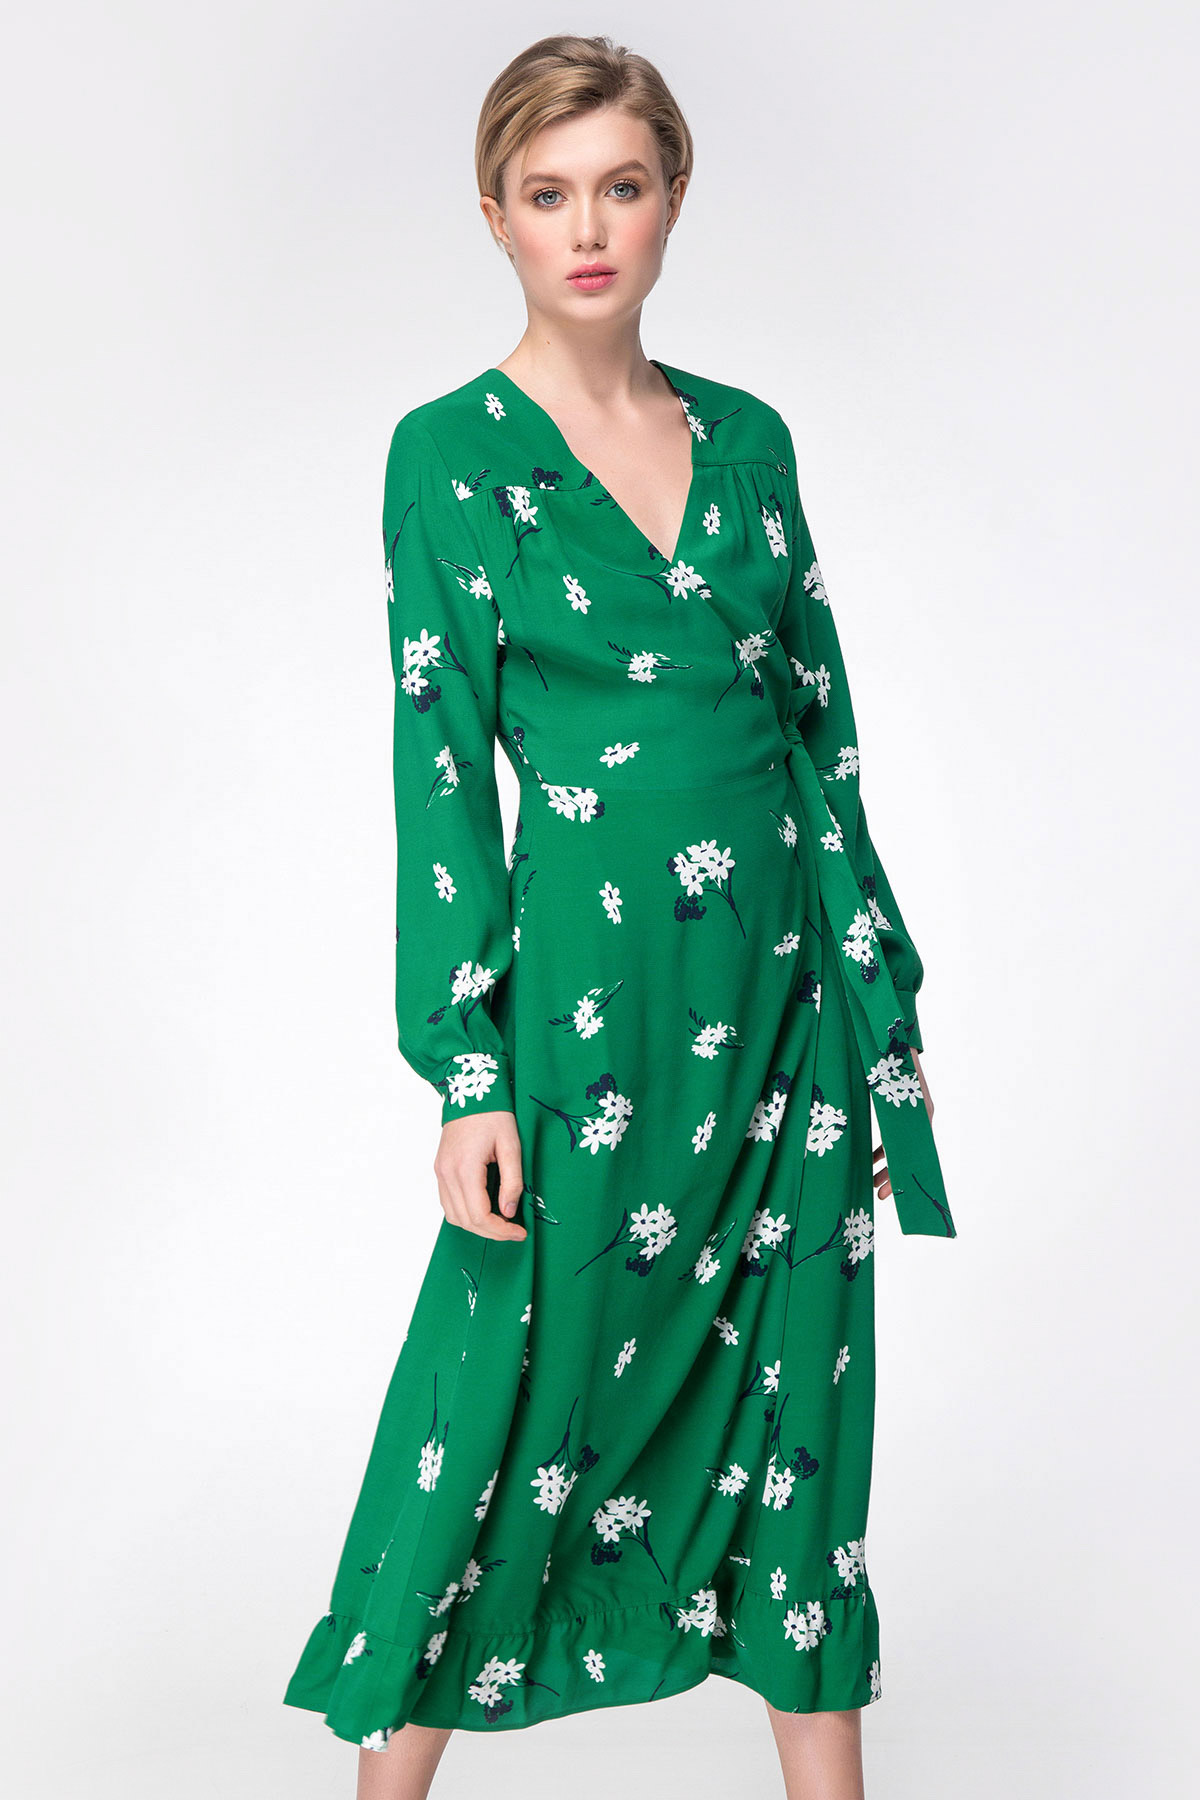 Green wrap mini dress with floral print, photo 4